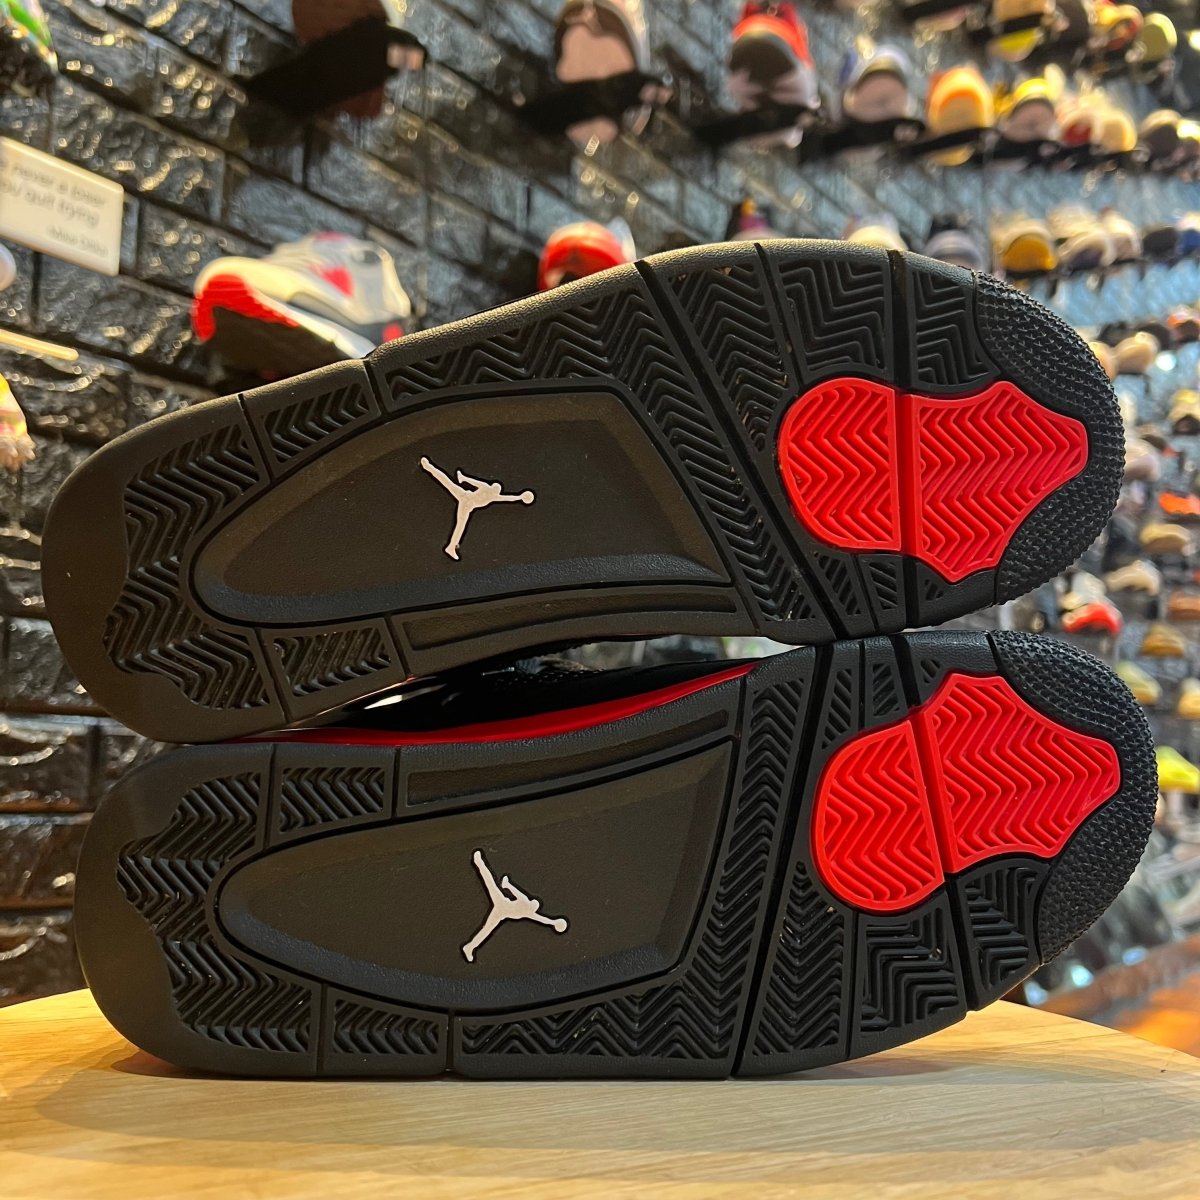 Jordan 4 Retro Red Thunder - Gently Enjoyed (Used) Men 8.5 - Mid Sneaker - Jawns on Fire Sneakers & Streetwear